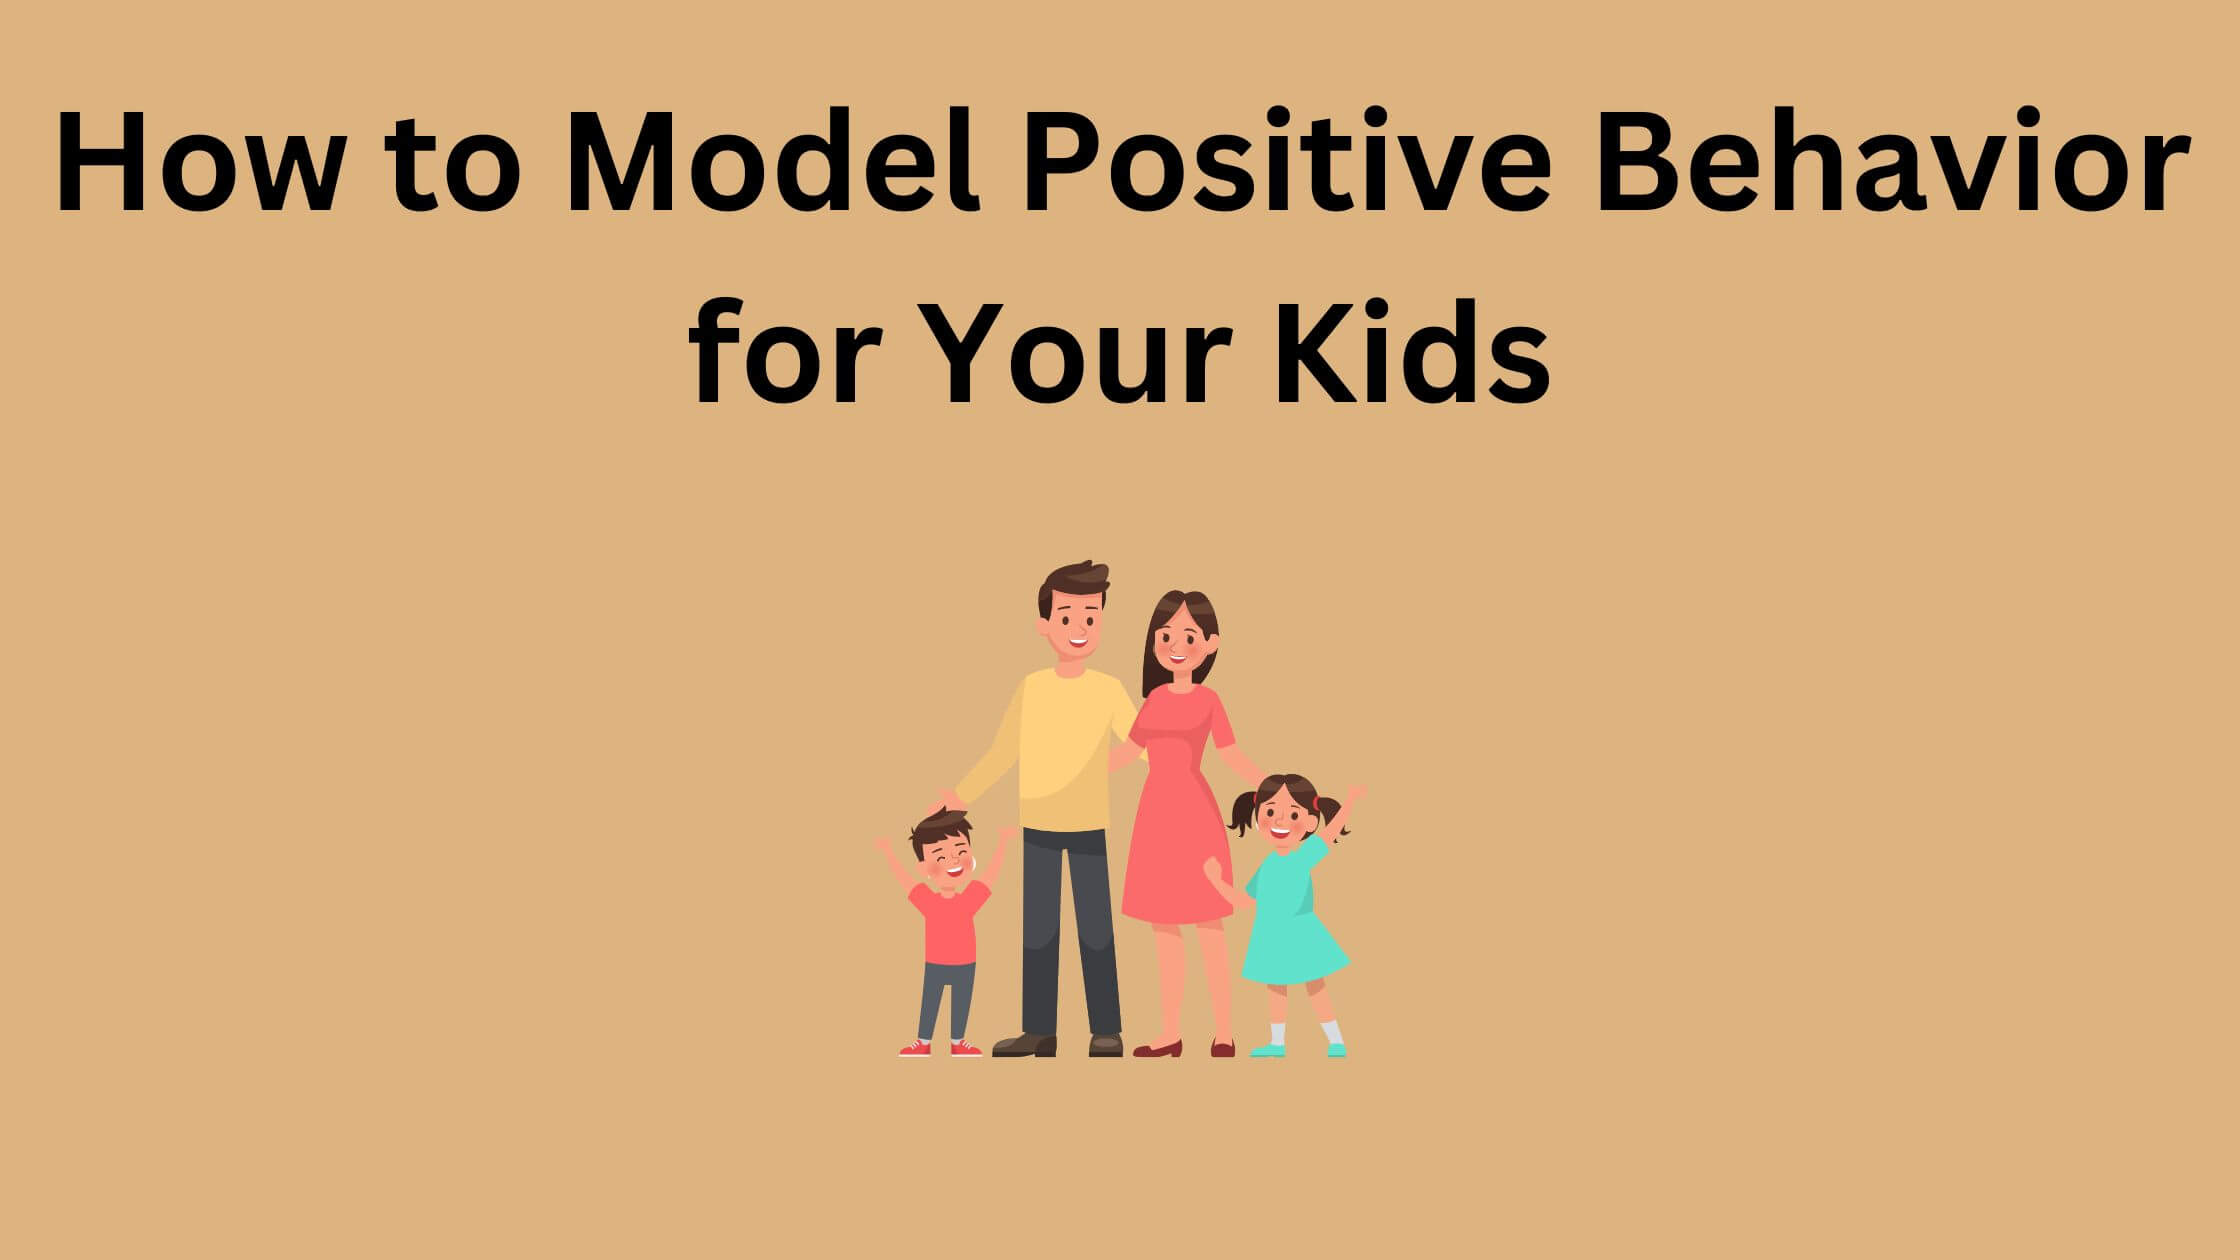 Ways to model positive behavior for your kids